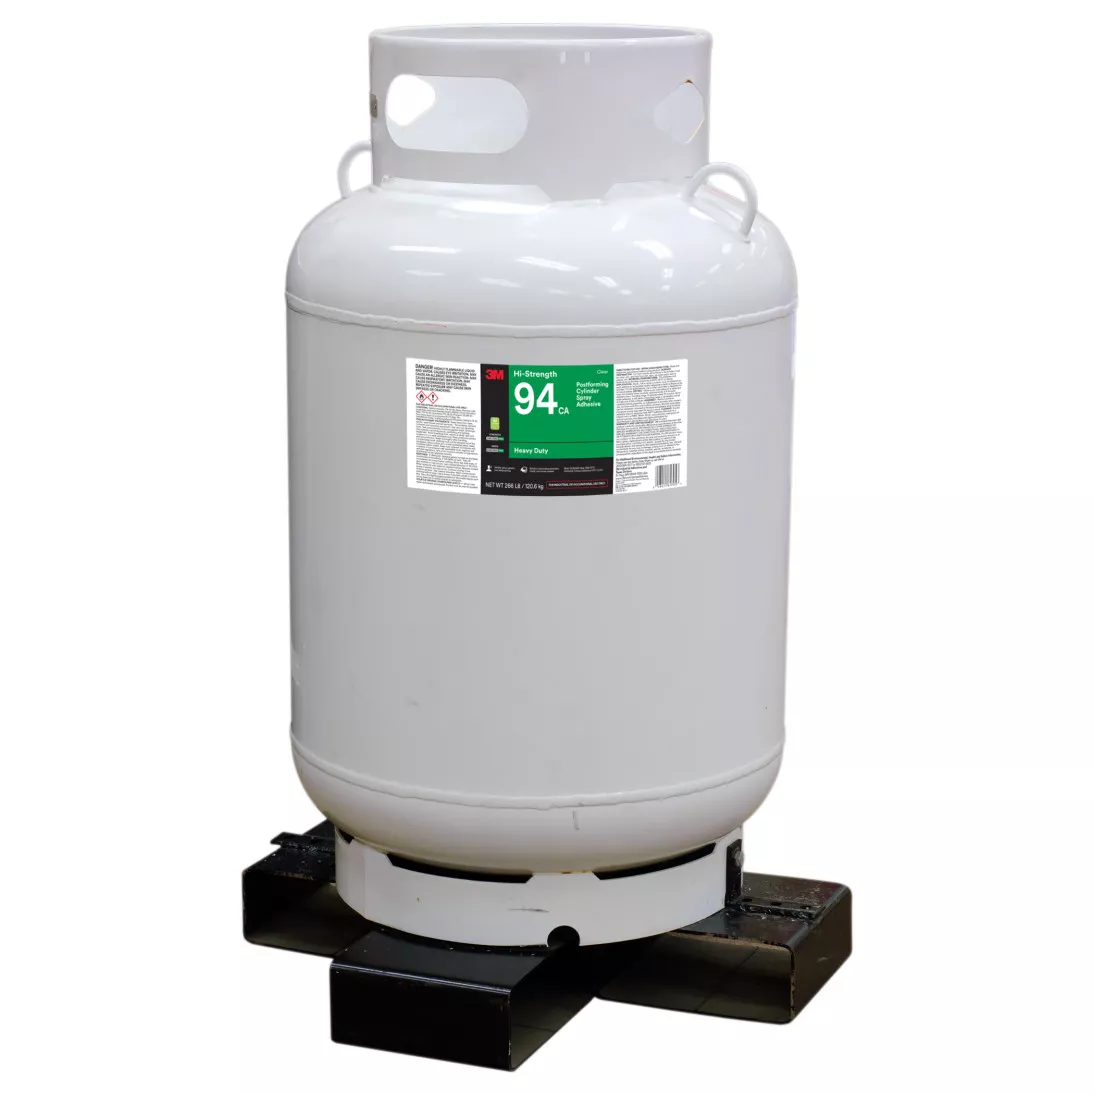 3M™ Hi-Strength Postforming 94 CA Cylinder Spray Adhesive, Clear, Jumbo
Cylinder (Net Wt 266 lb)